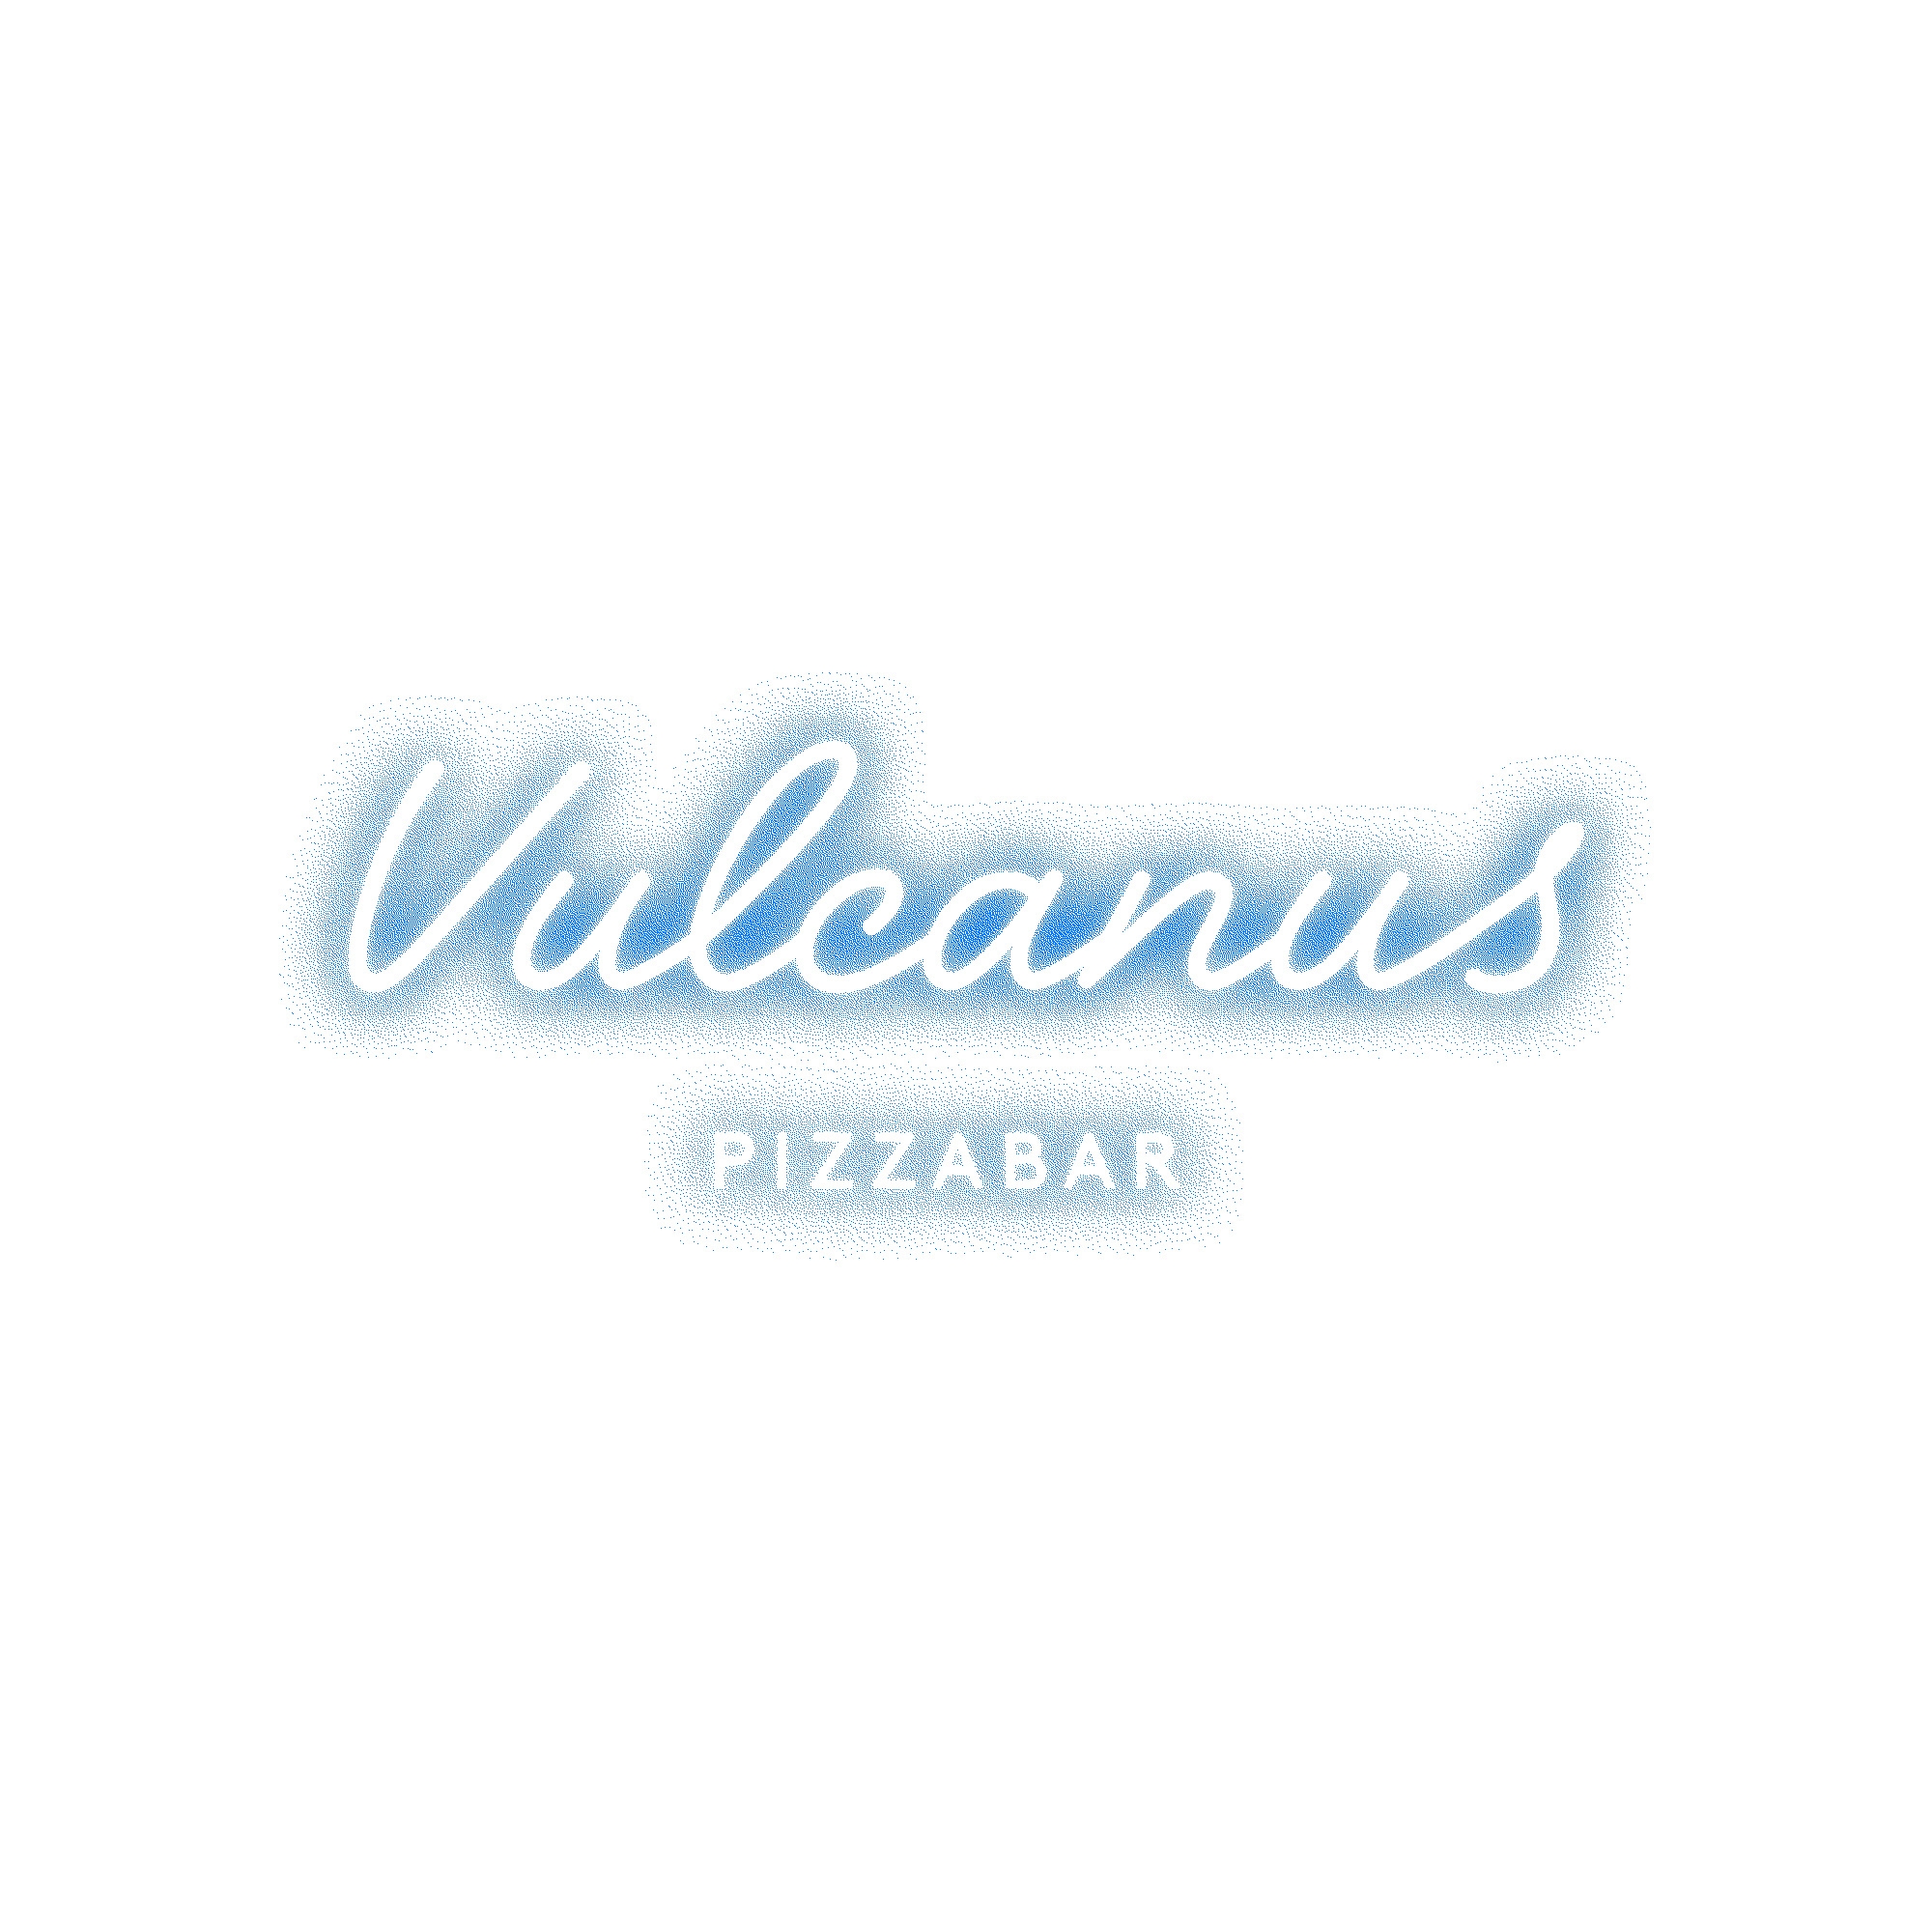 Vulcanus Pizzabár logó